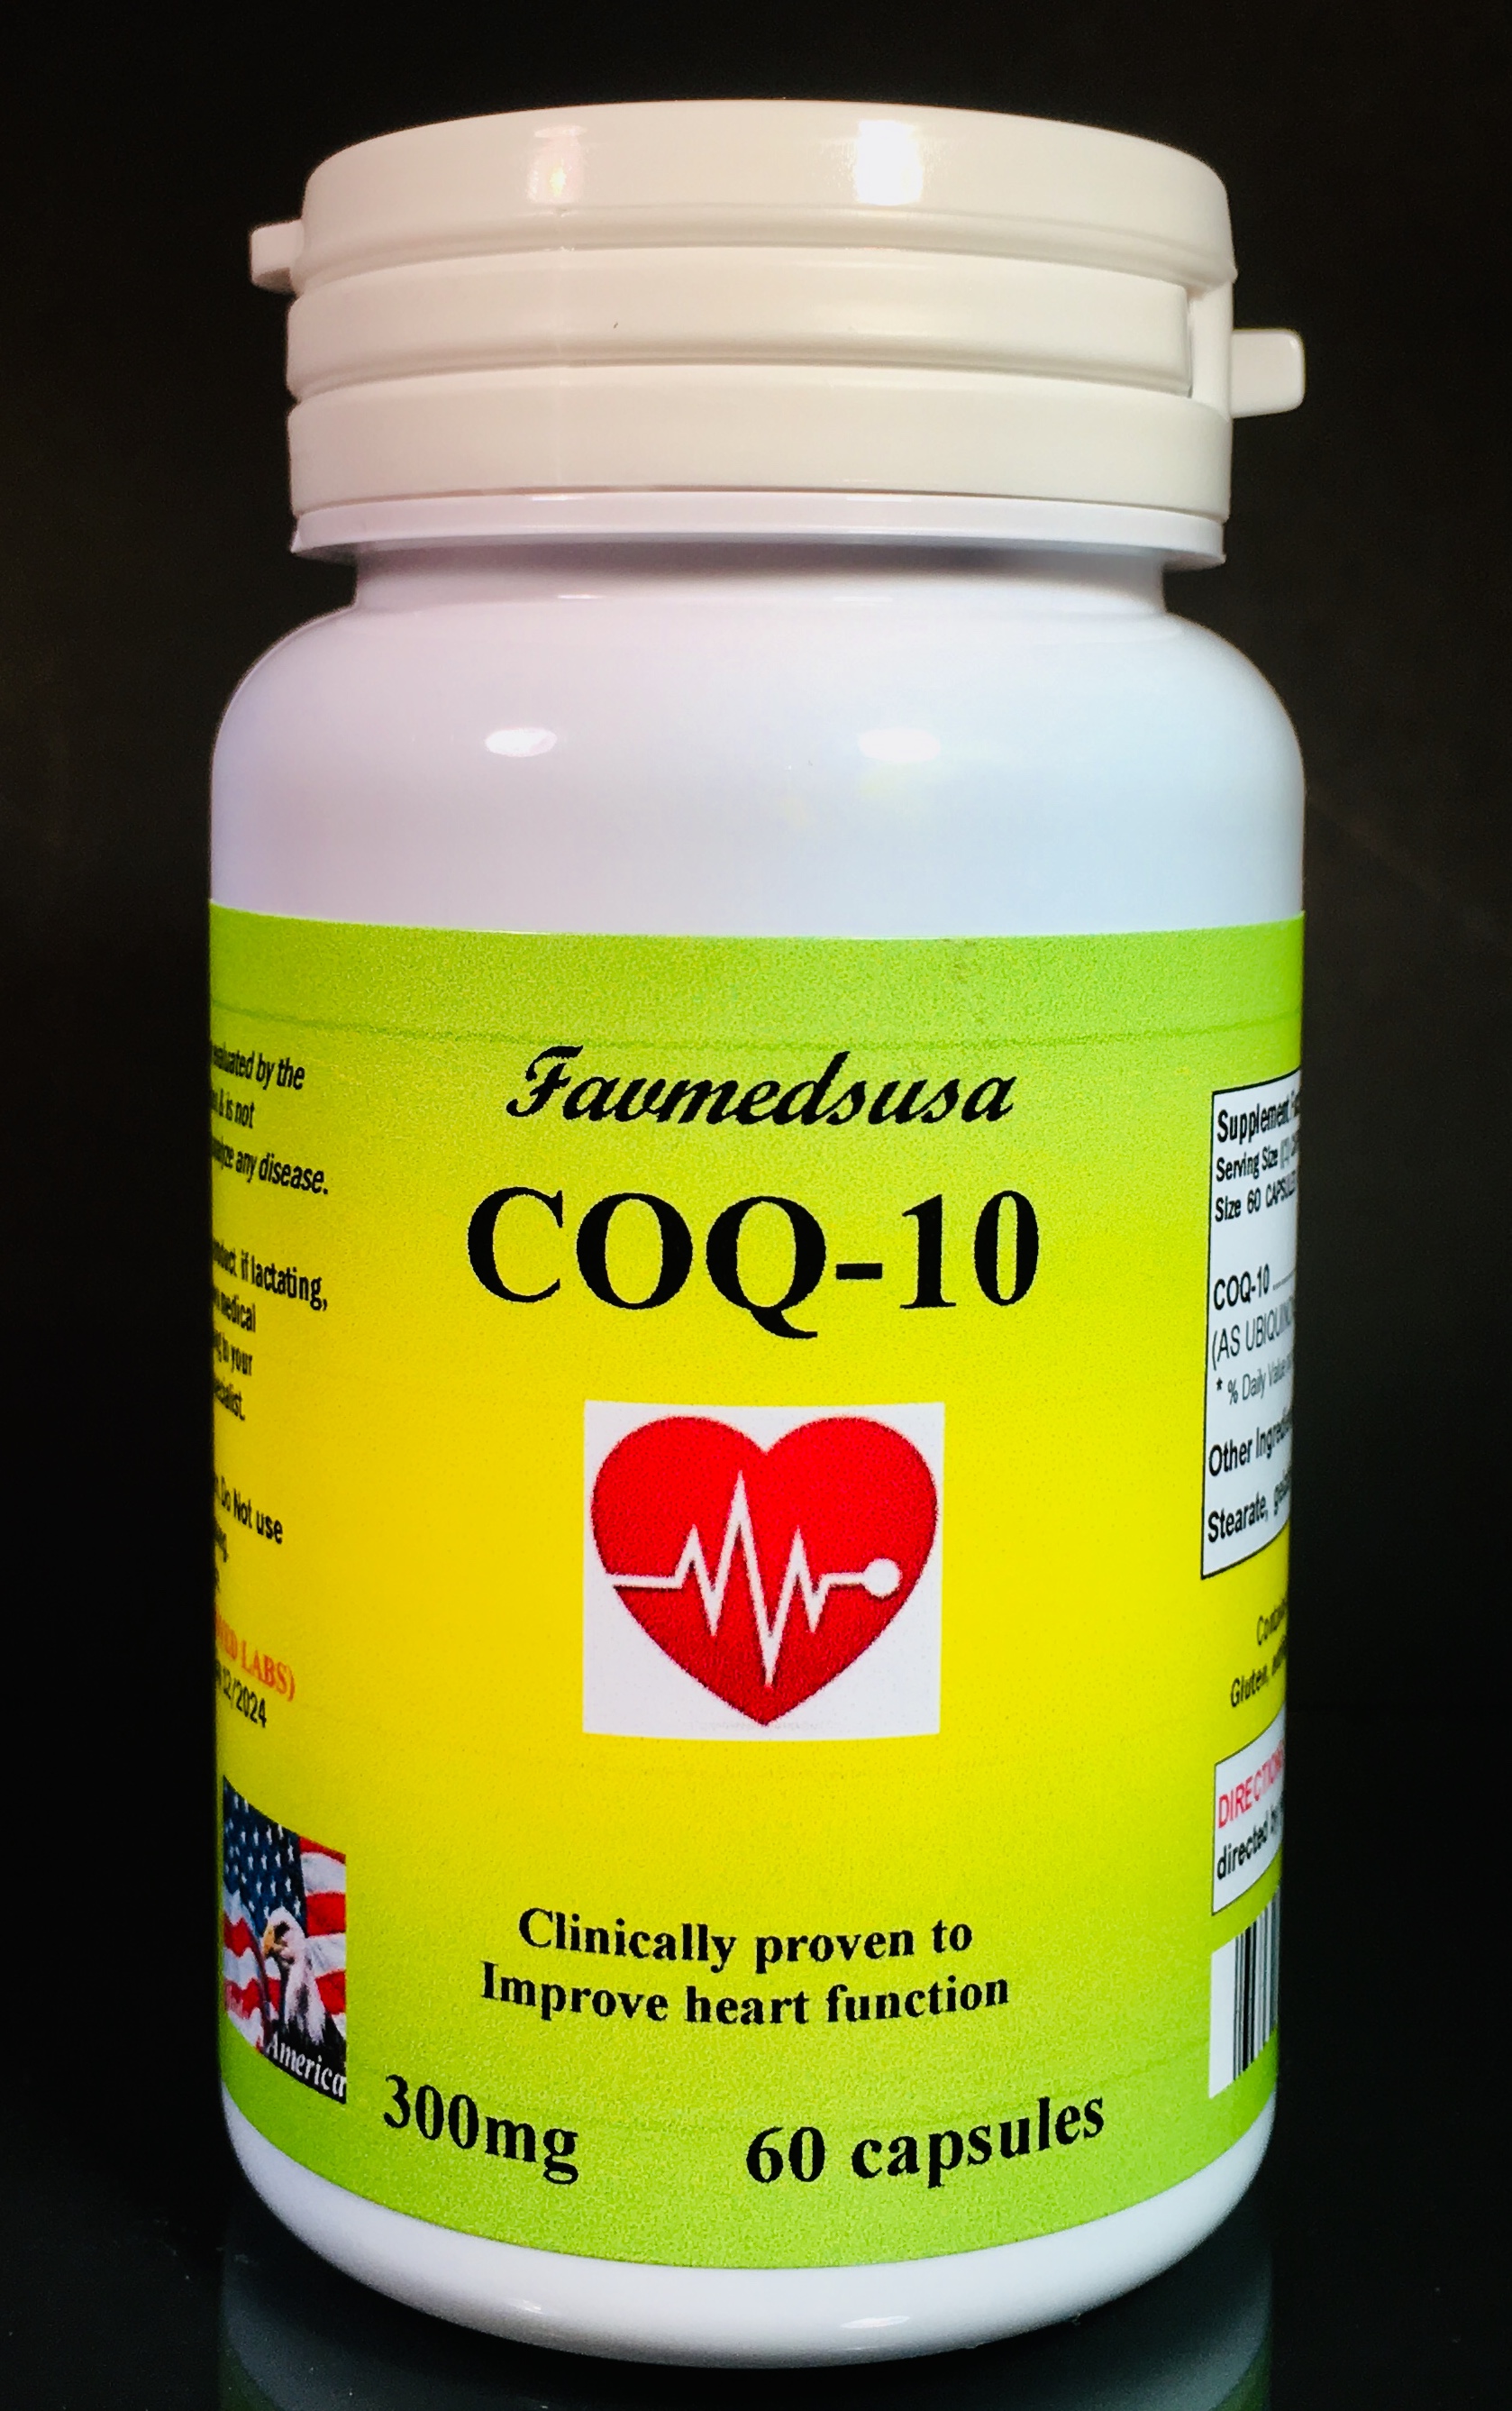 CoQ-10 coq10 CO Q10 co-enzyme 300mg, anti-oxidant - 300 soft gels -  FavMedsUSA.com